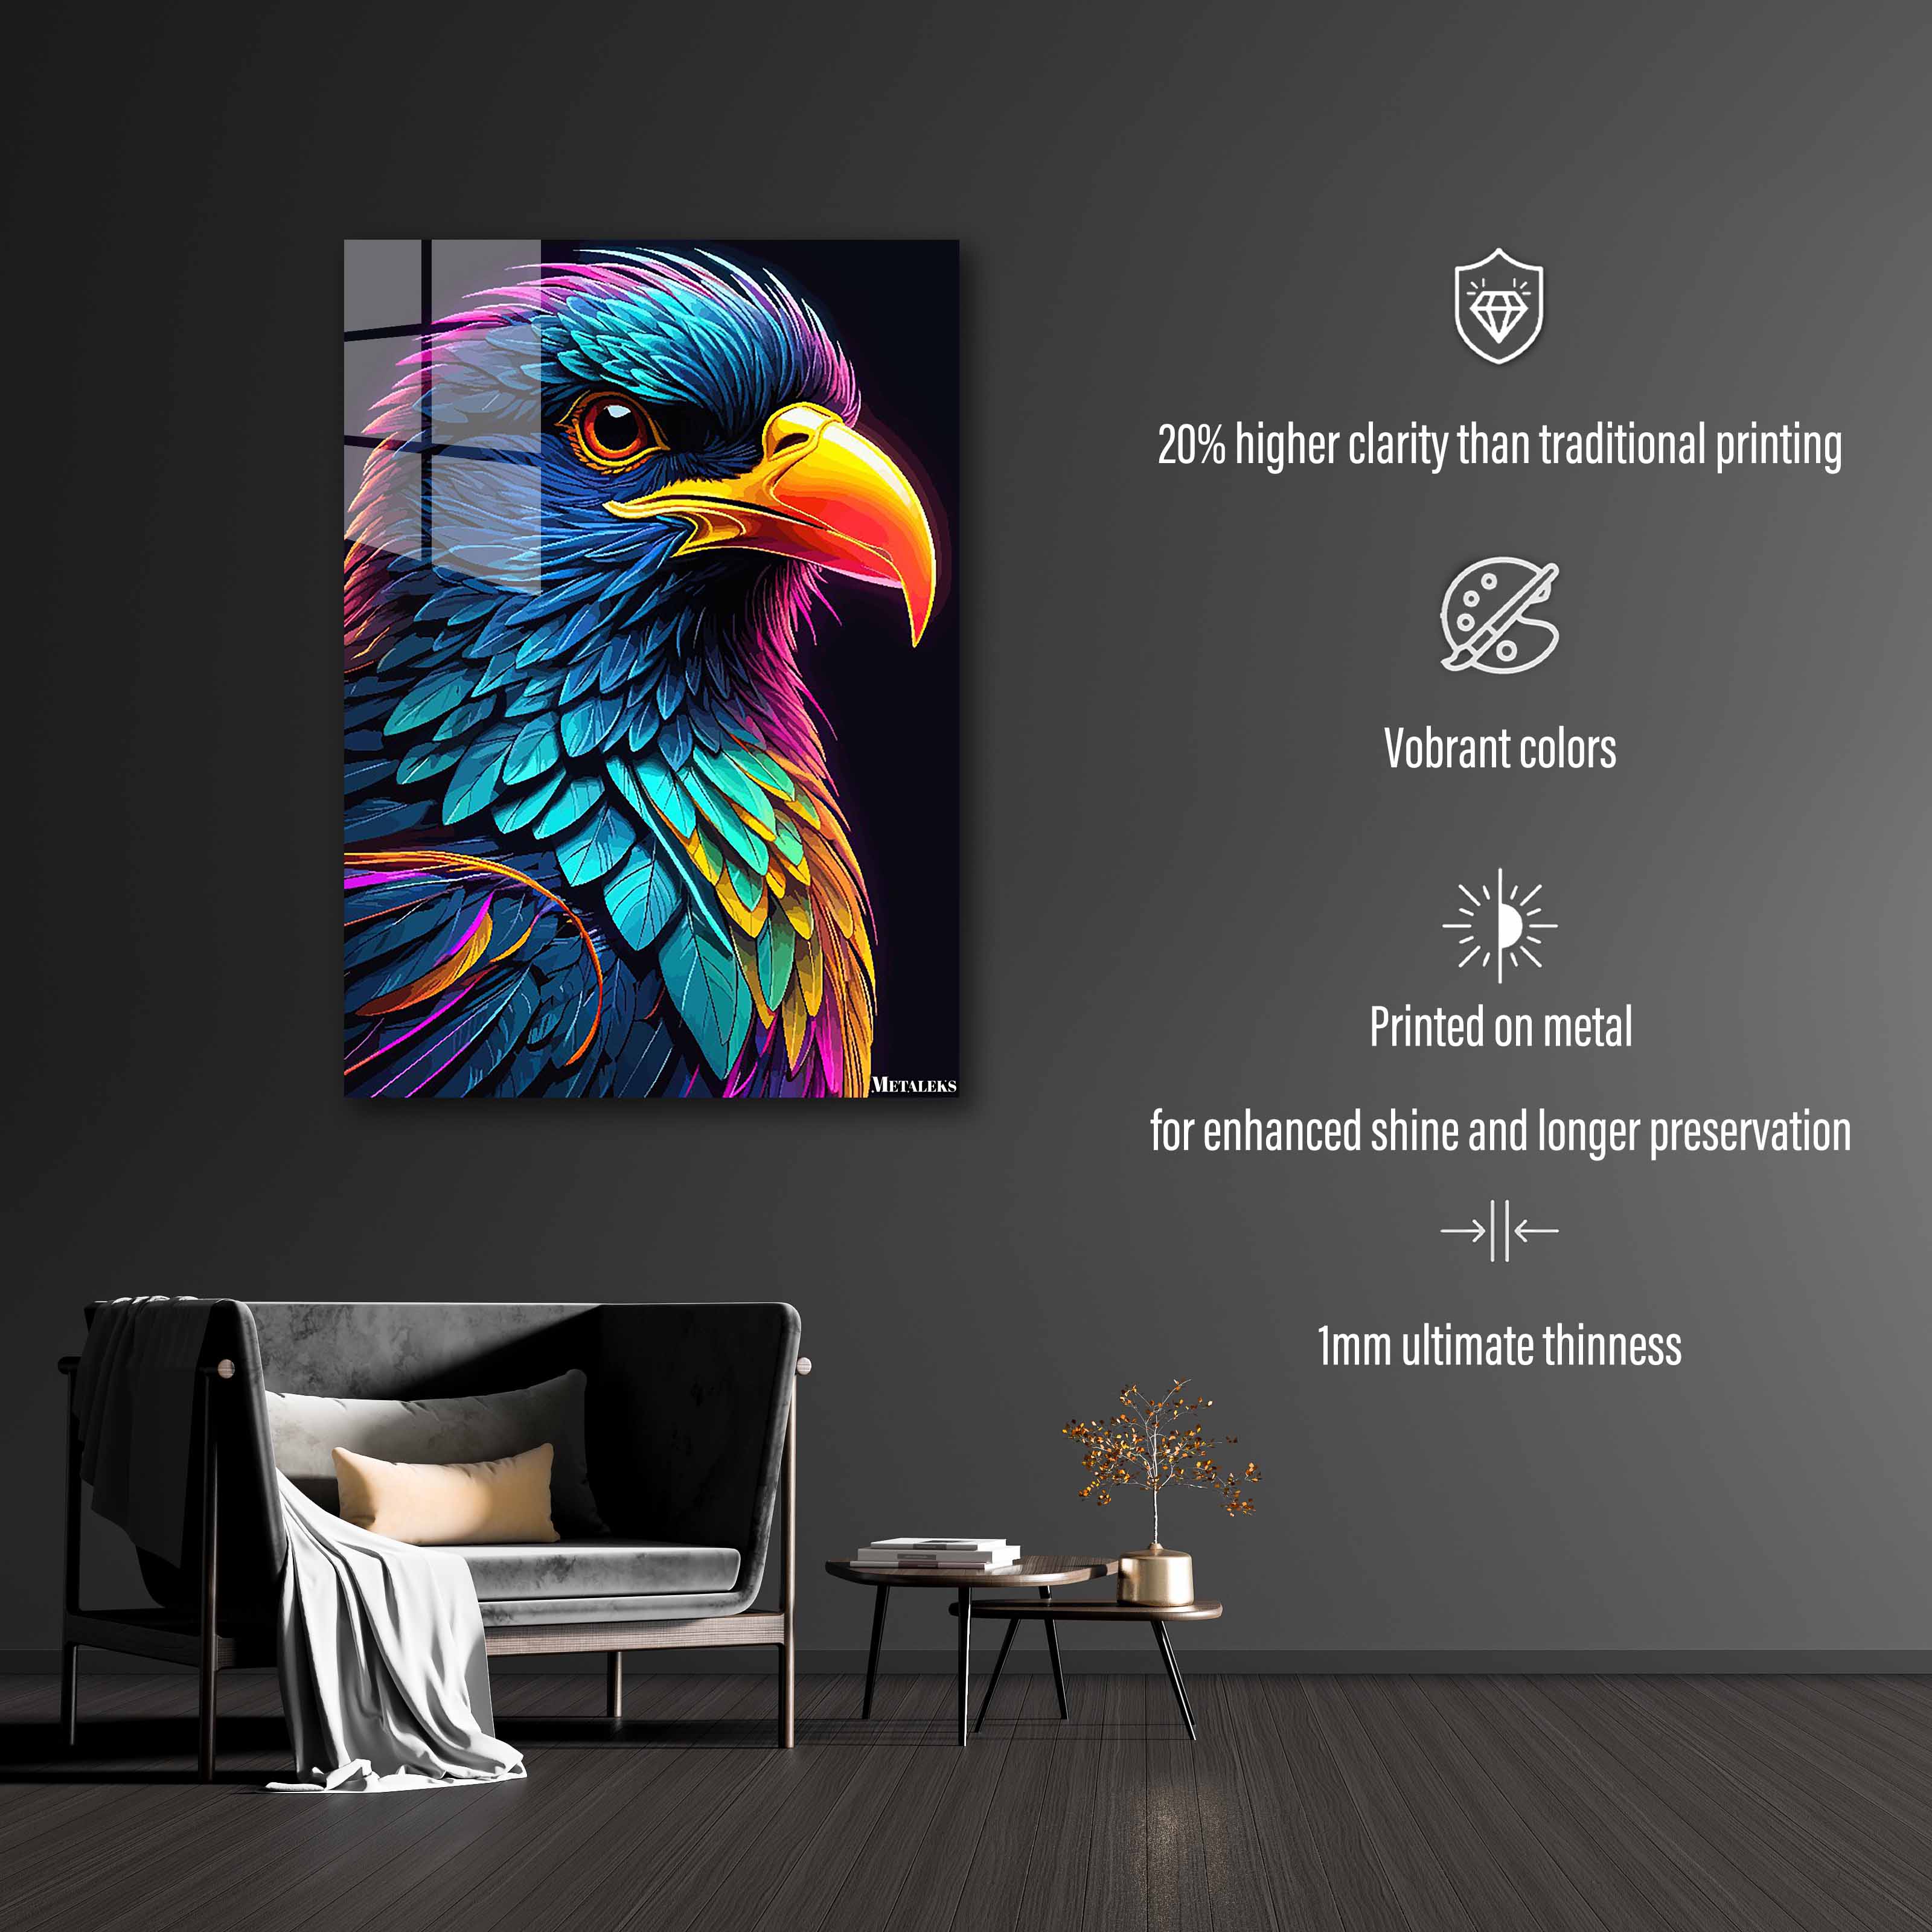 Bird neon theme-designed by @Sheshh